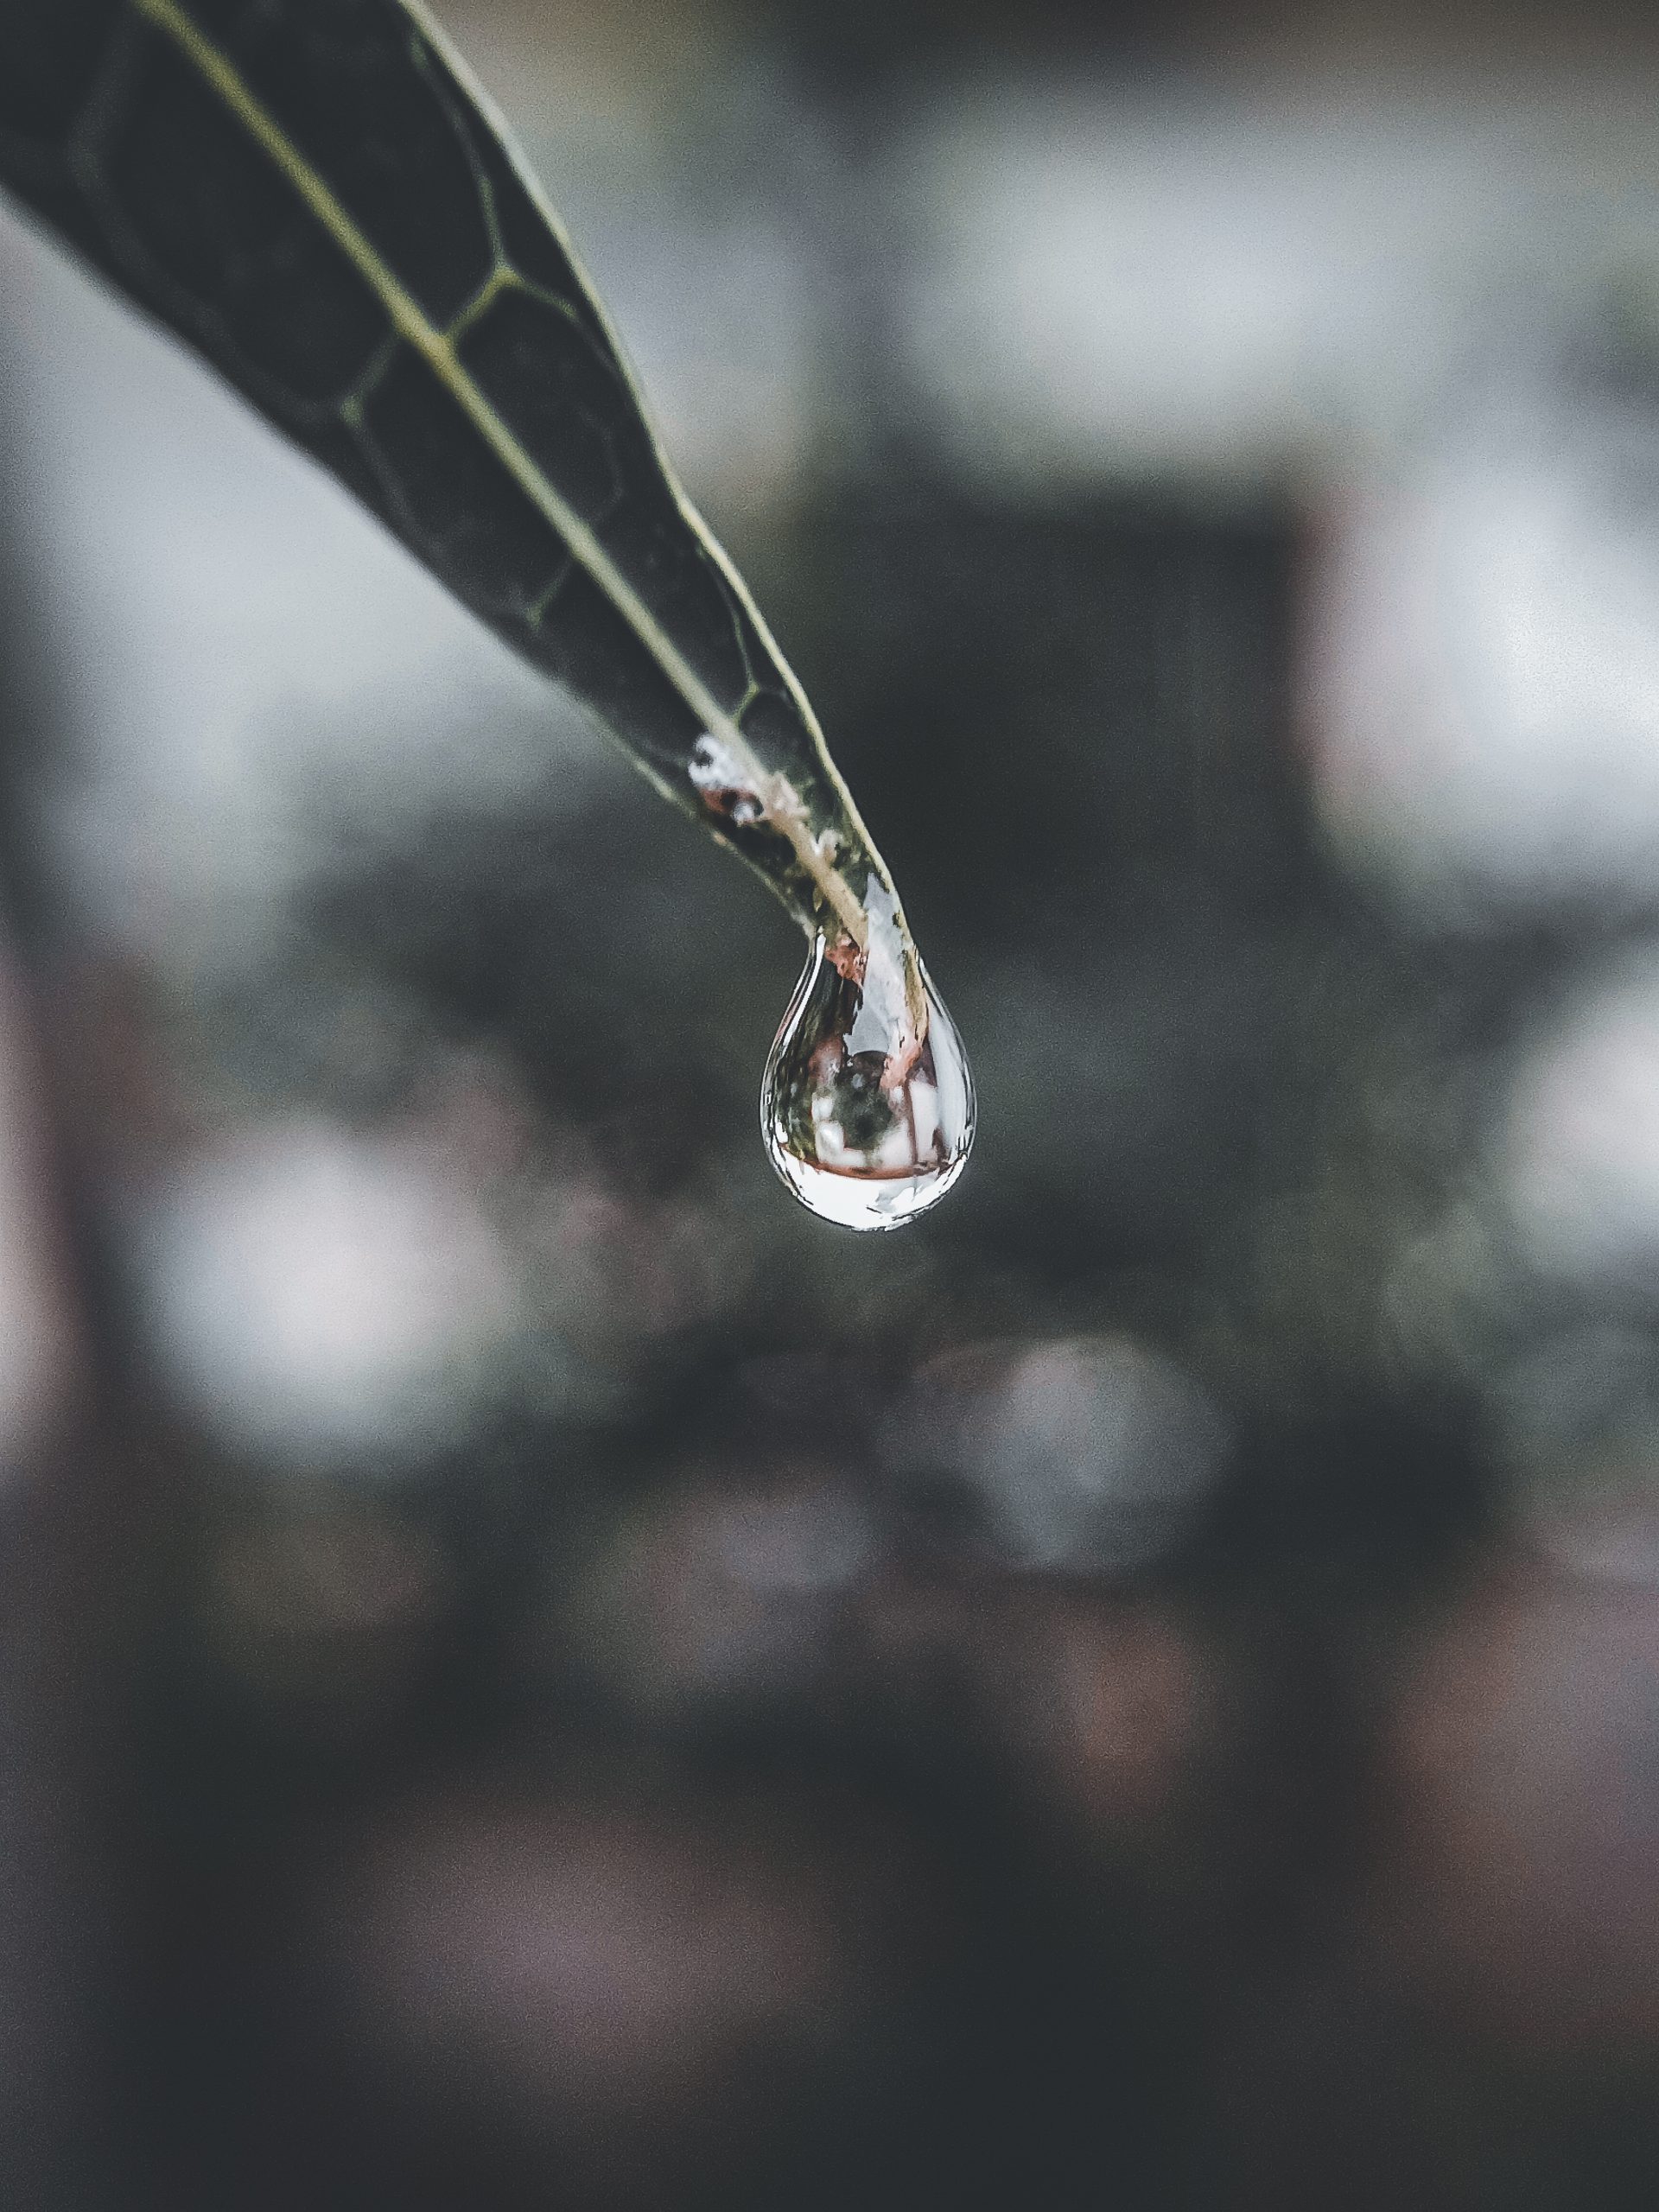 Water drop on a leaf tip